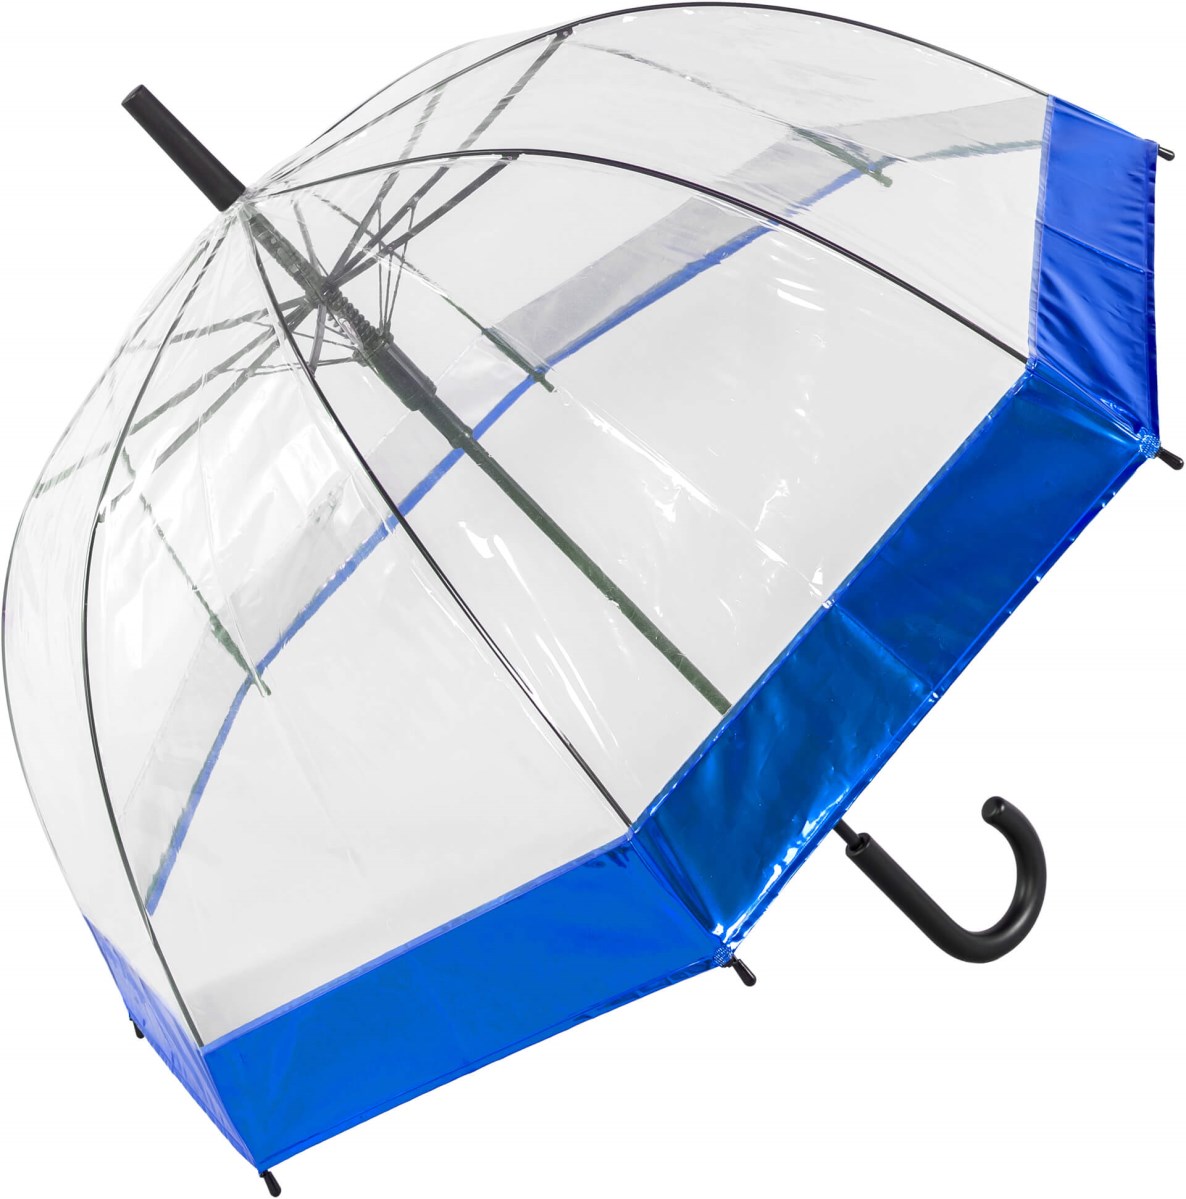 See Through Umbrella with Metallic Blue Border (18020)